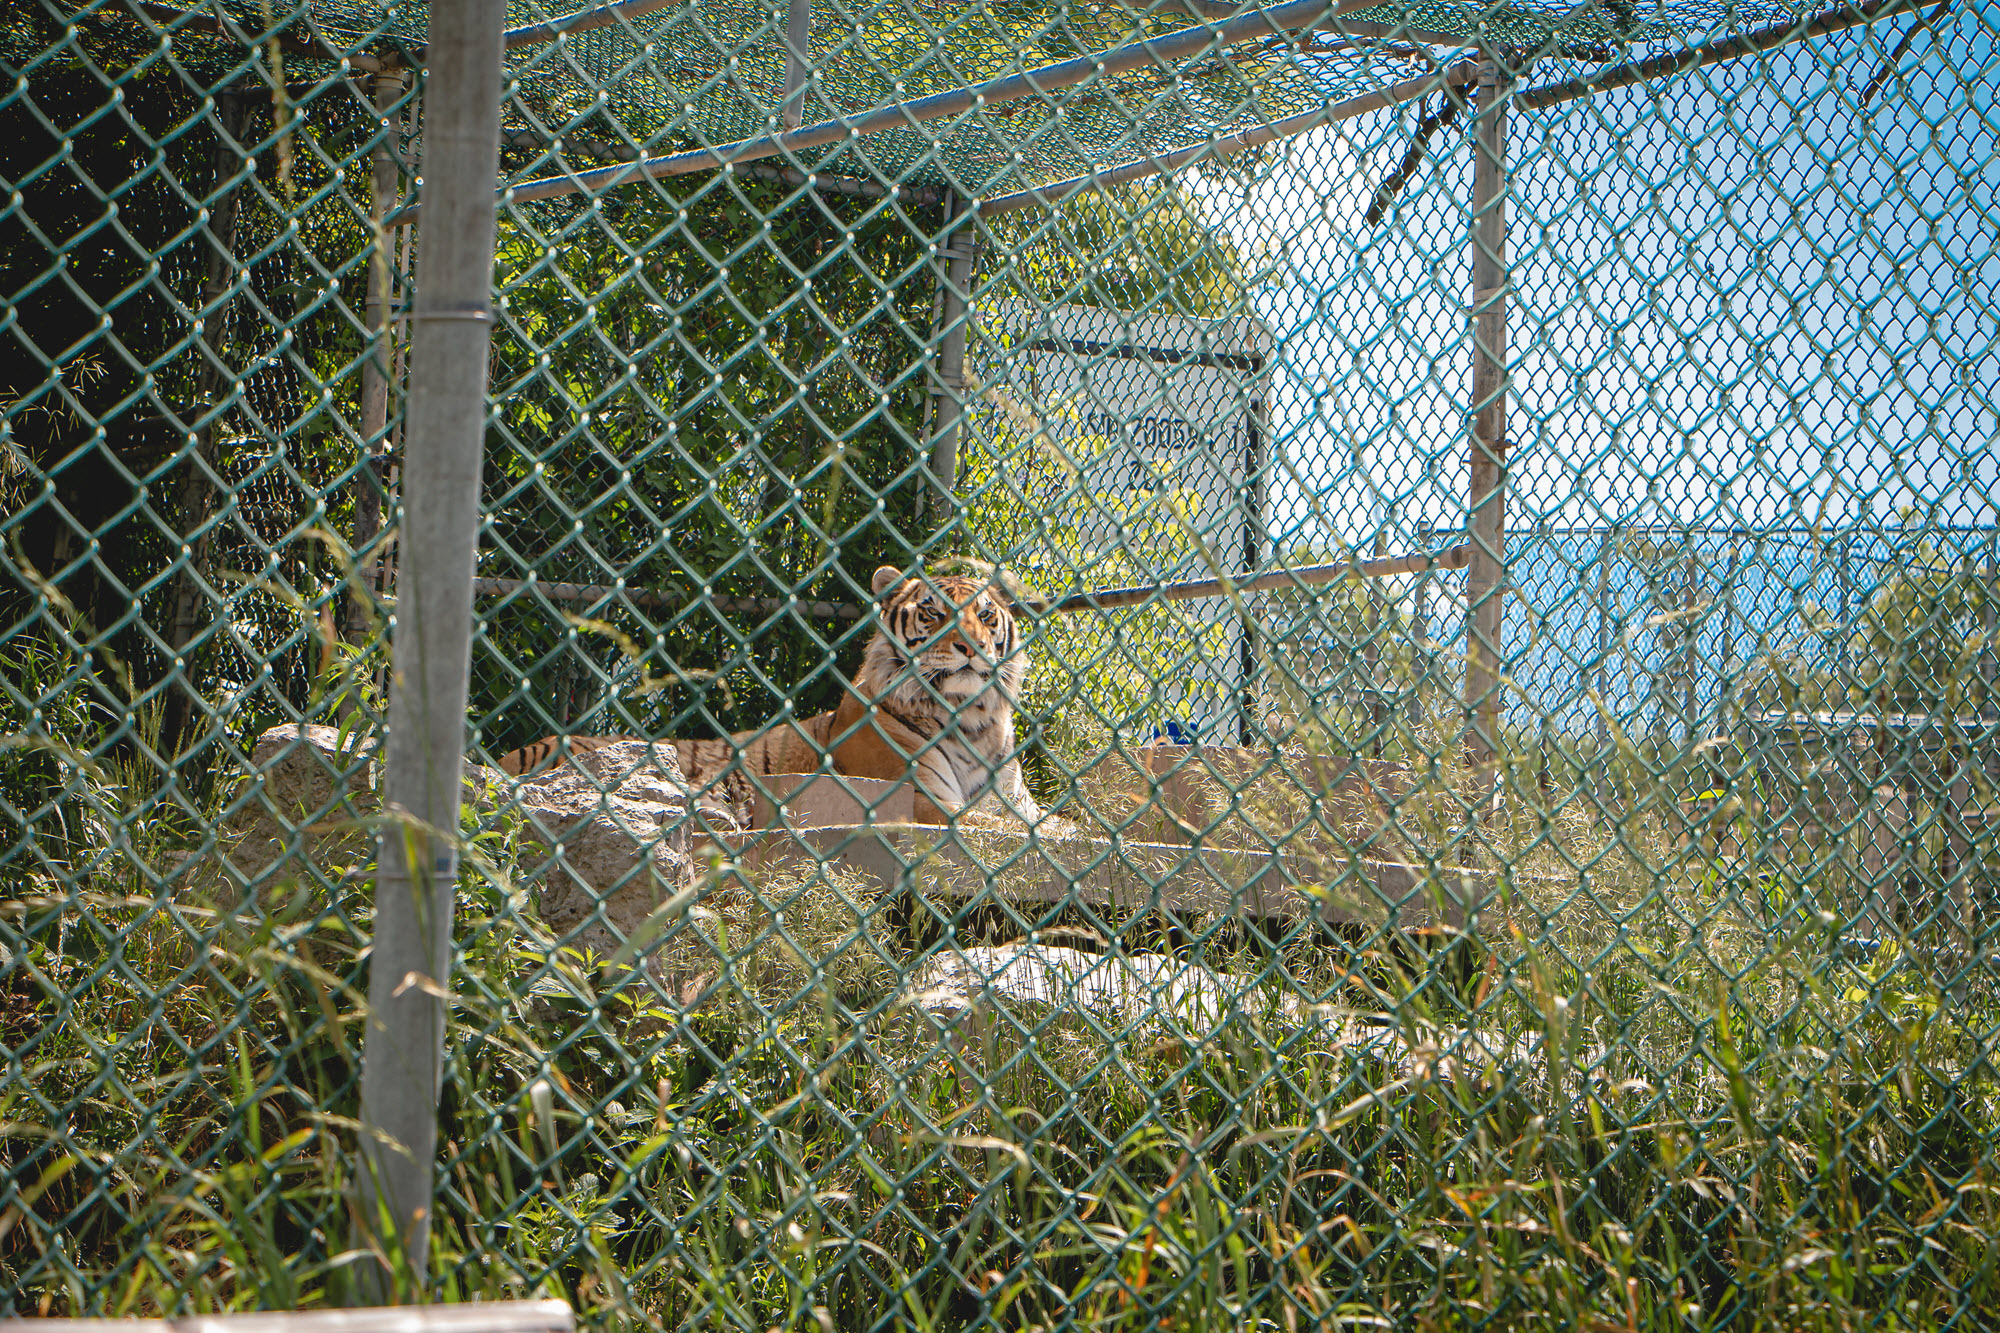 Image shows tiger in enclosure at Jungle Cat World.